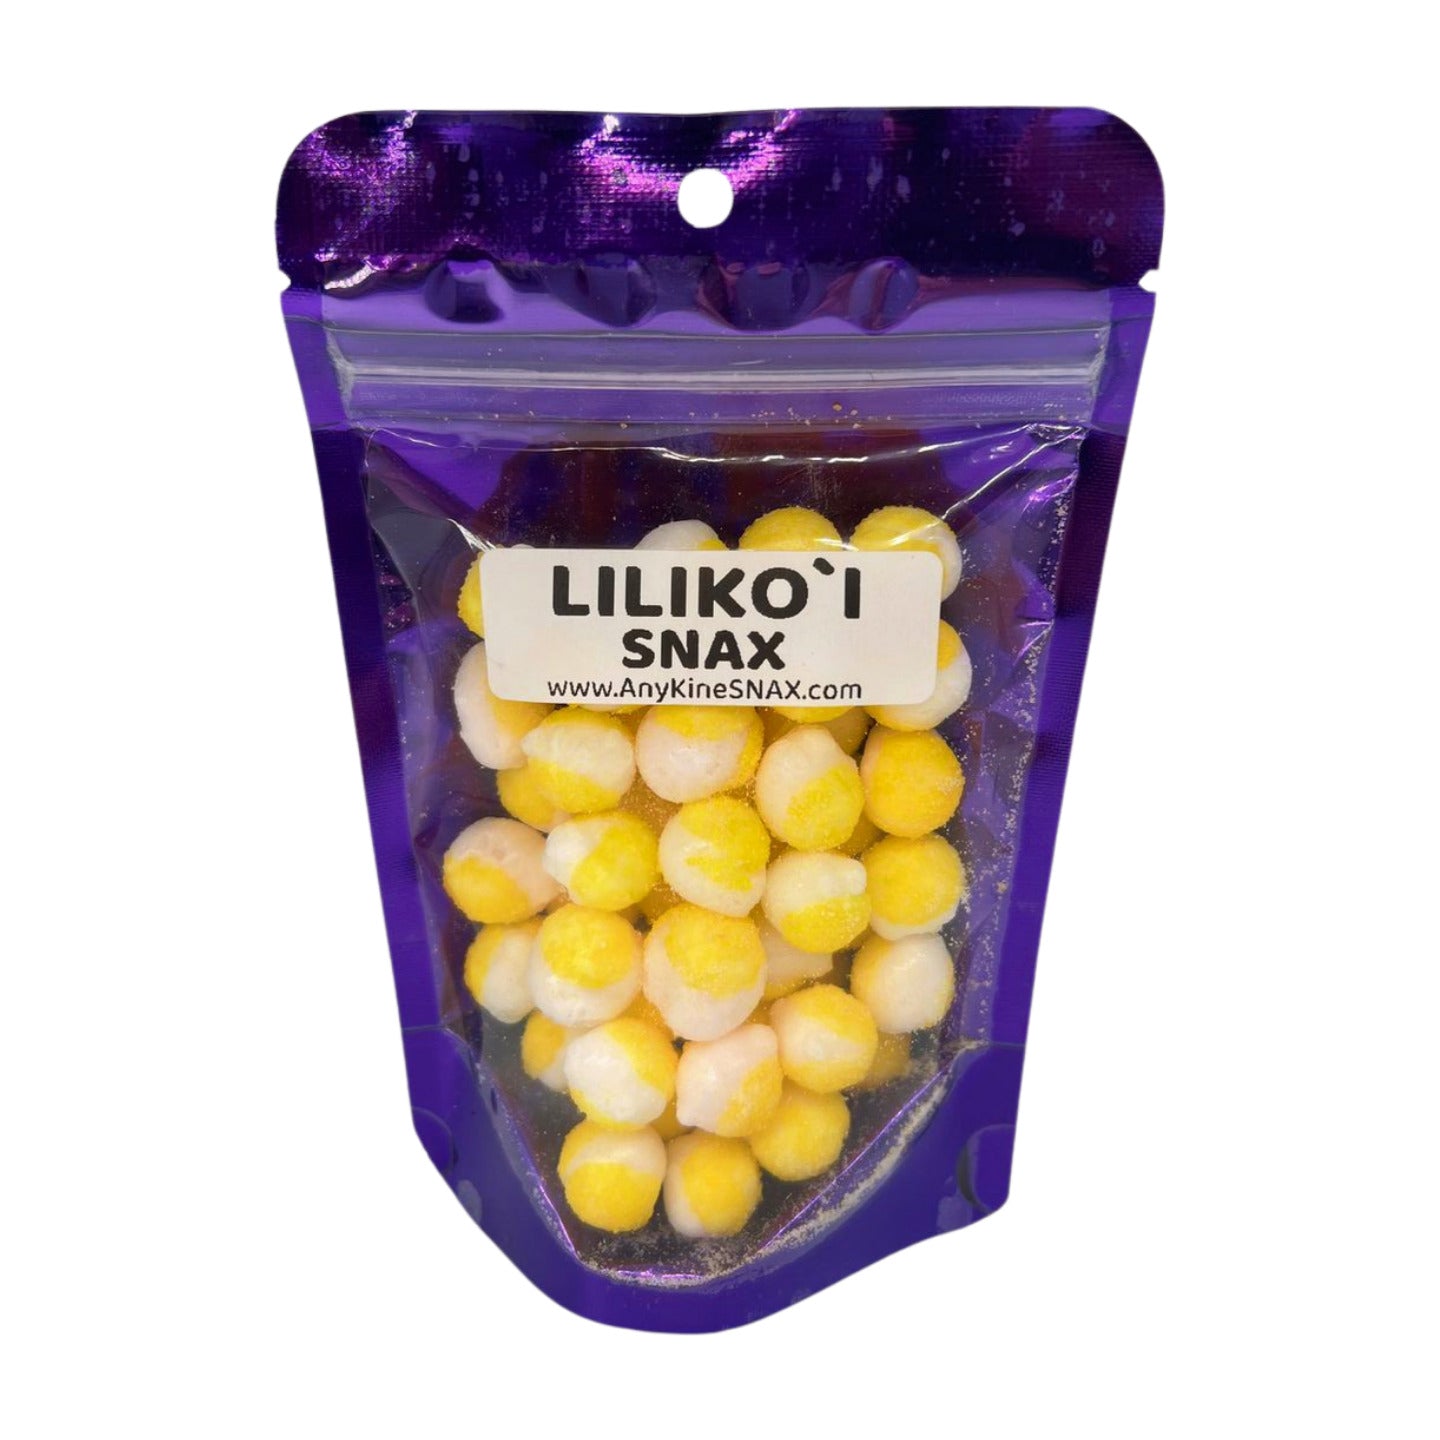 Pop-Up Mākeke - Any Kine Snax - Freeze Dried Liliko'i SNAX - Front View